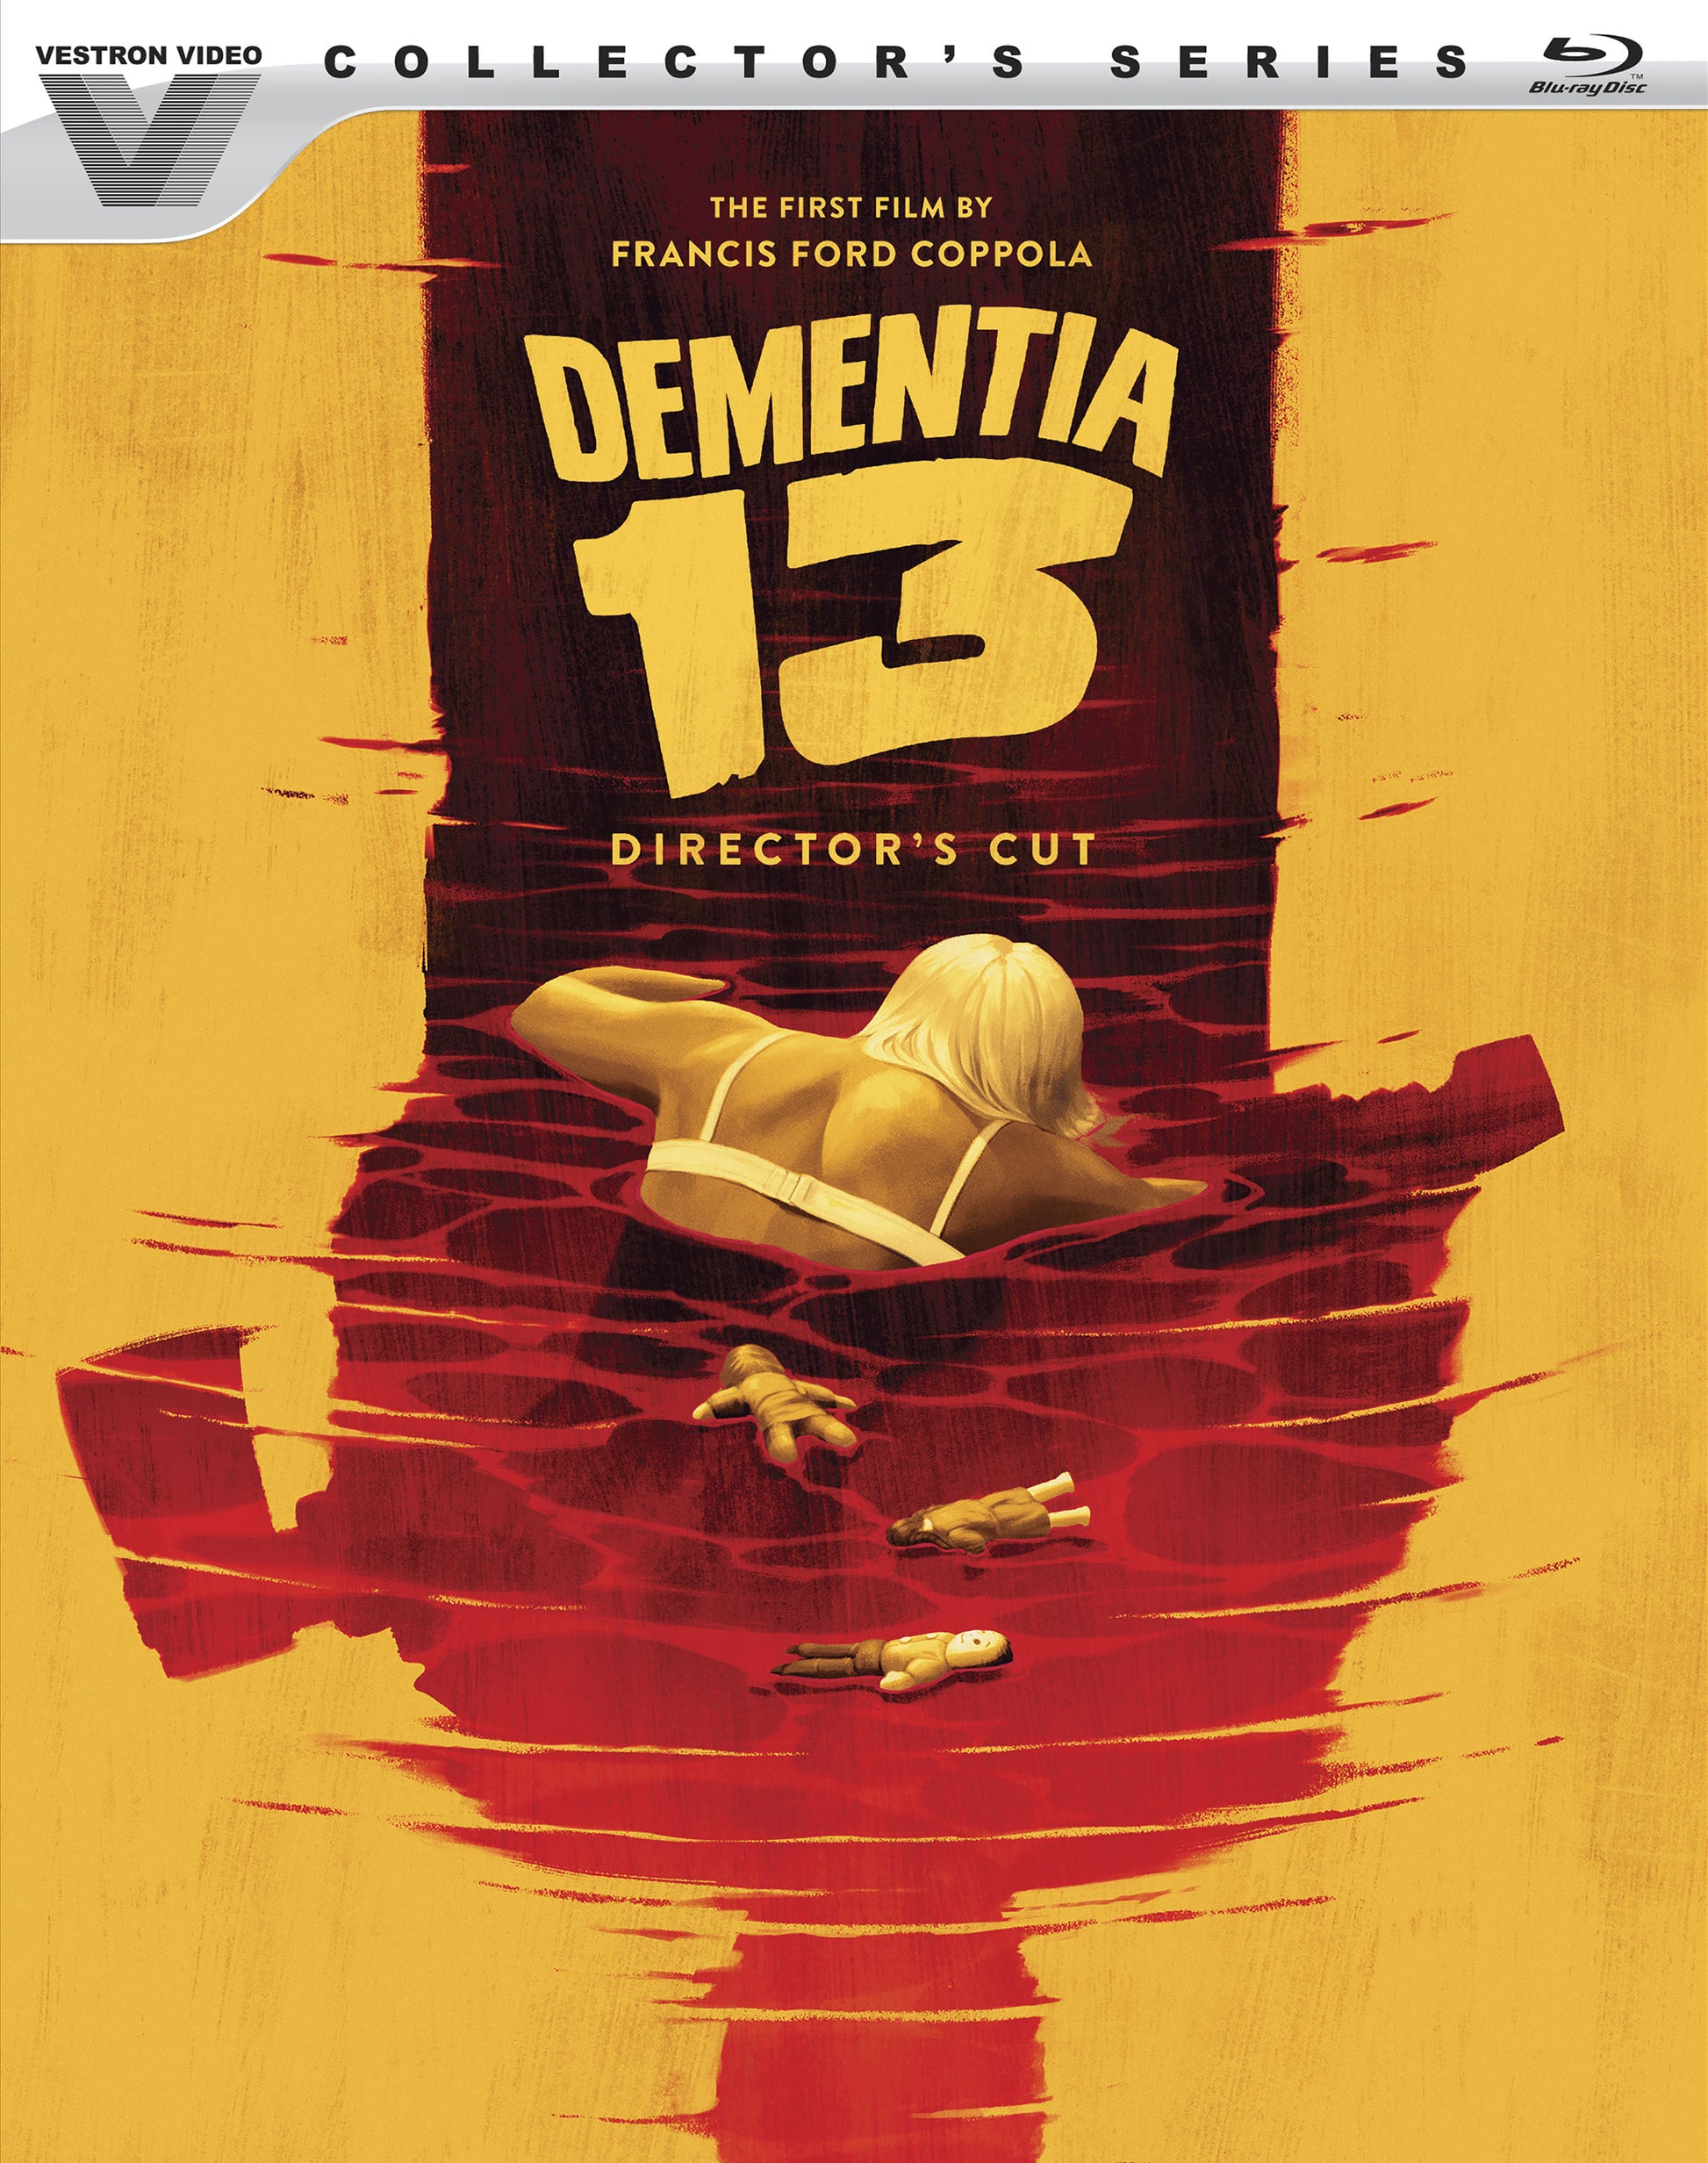 Dementia 13 [Directors' Cut] [Blu-ray] cover art